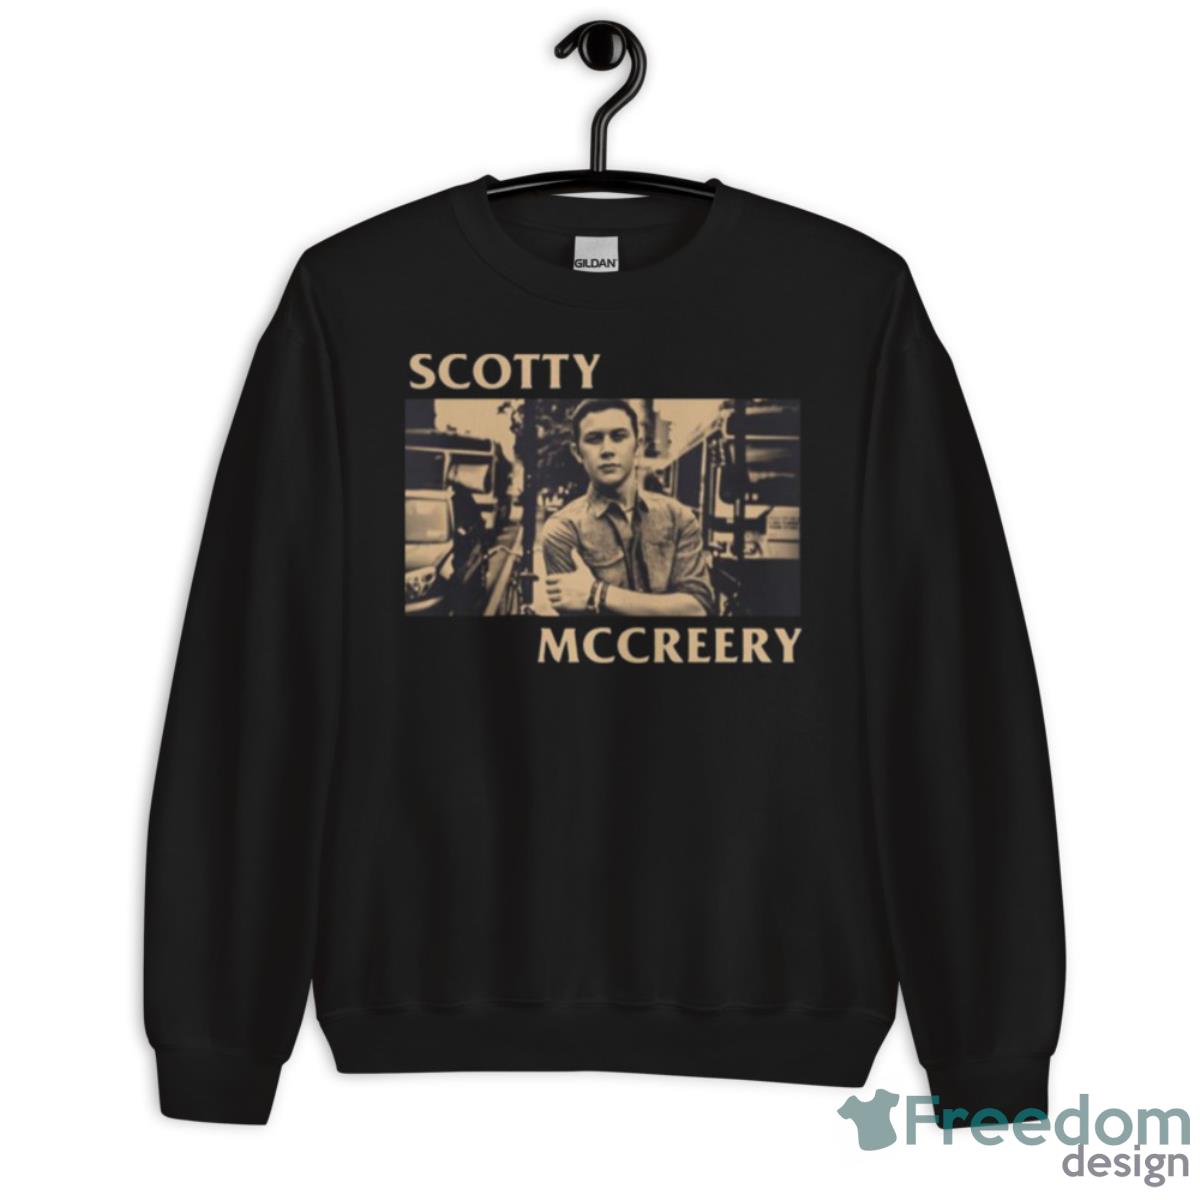 Scotty Mccreery Album Cover Shirt